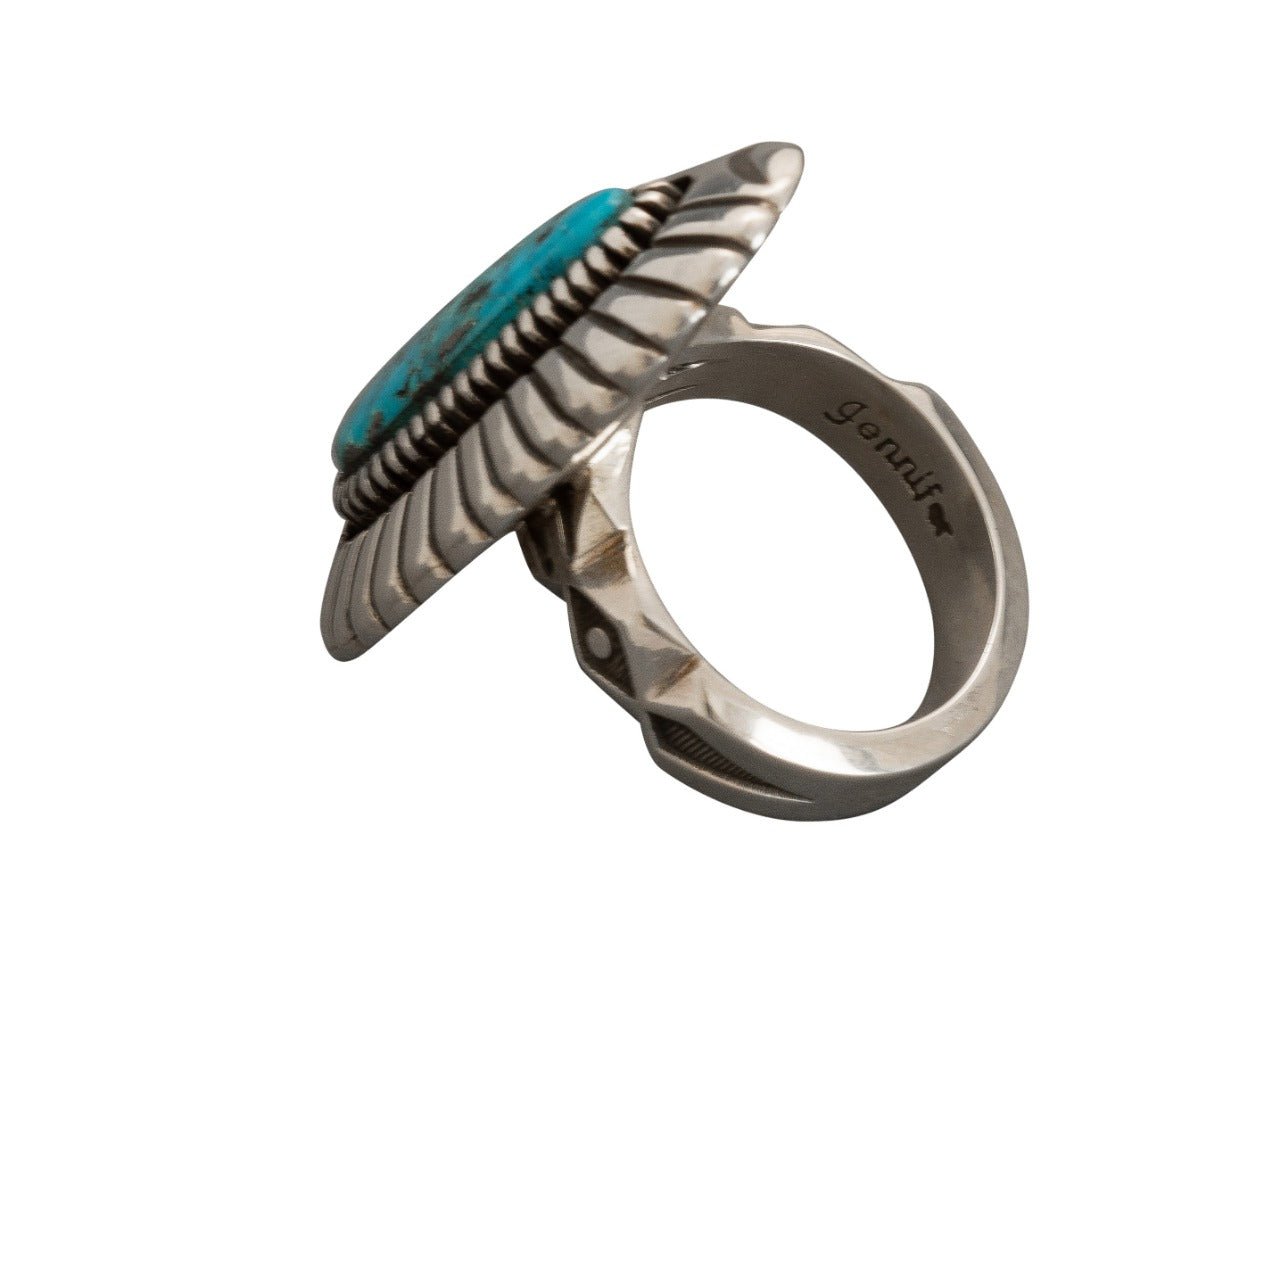 Large Ring by Jennifer Curtis of Natural Morenci Turquoise - Turquoise & Tufa